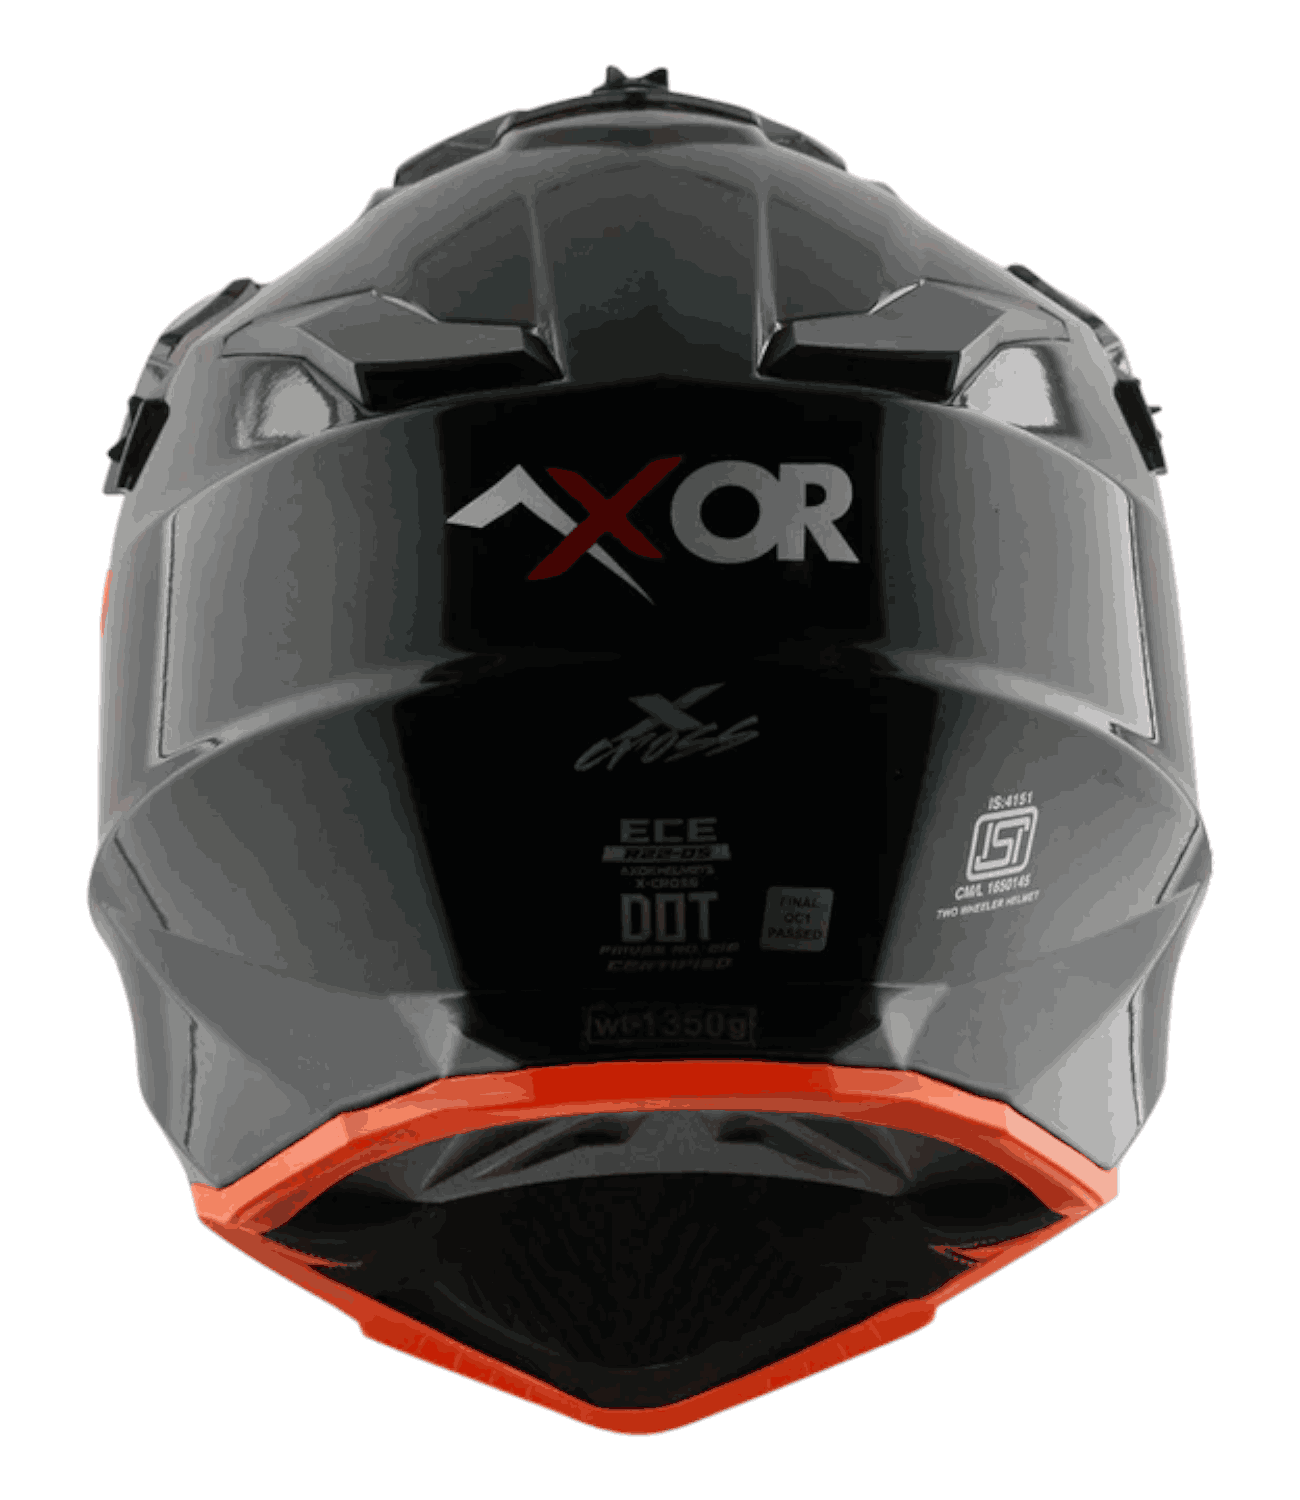 Axor X-Cross Single Color Helmet Black Orange